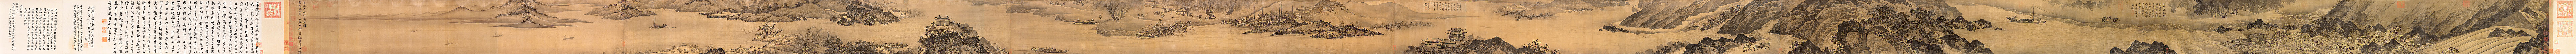 Zehntausend Meilen am Fluss Yangtze, von einem unbekannten Künstler der Zhe-Schule (Bildanfang ganz rechts)